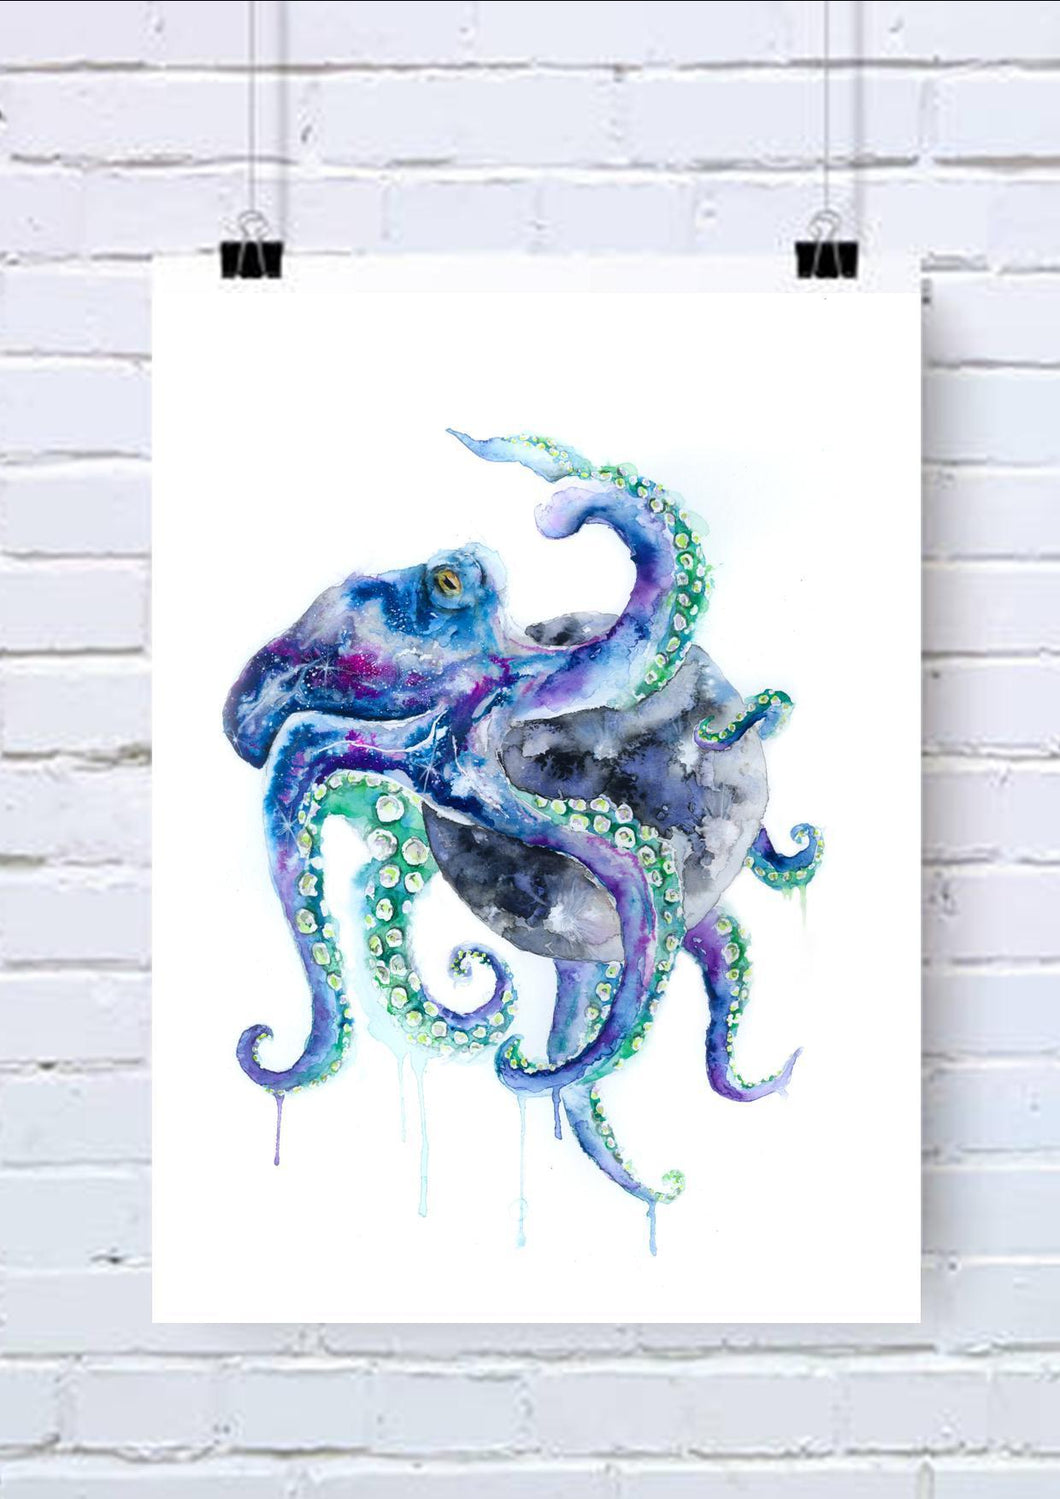 Octopus Watercolour Accessories